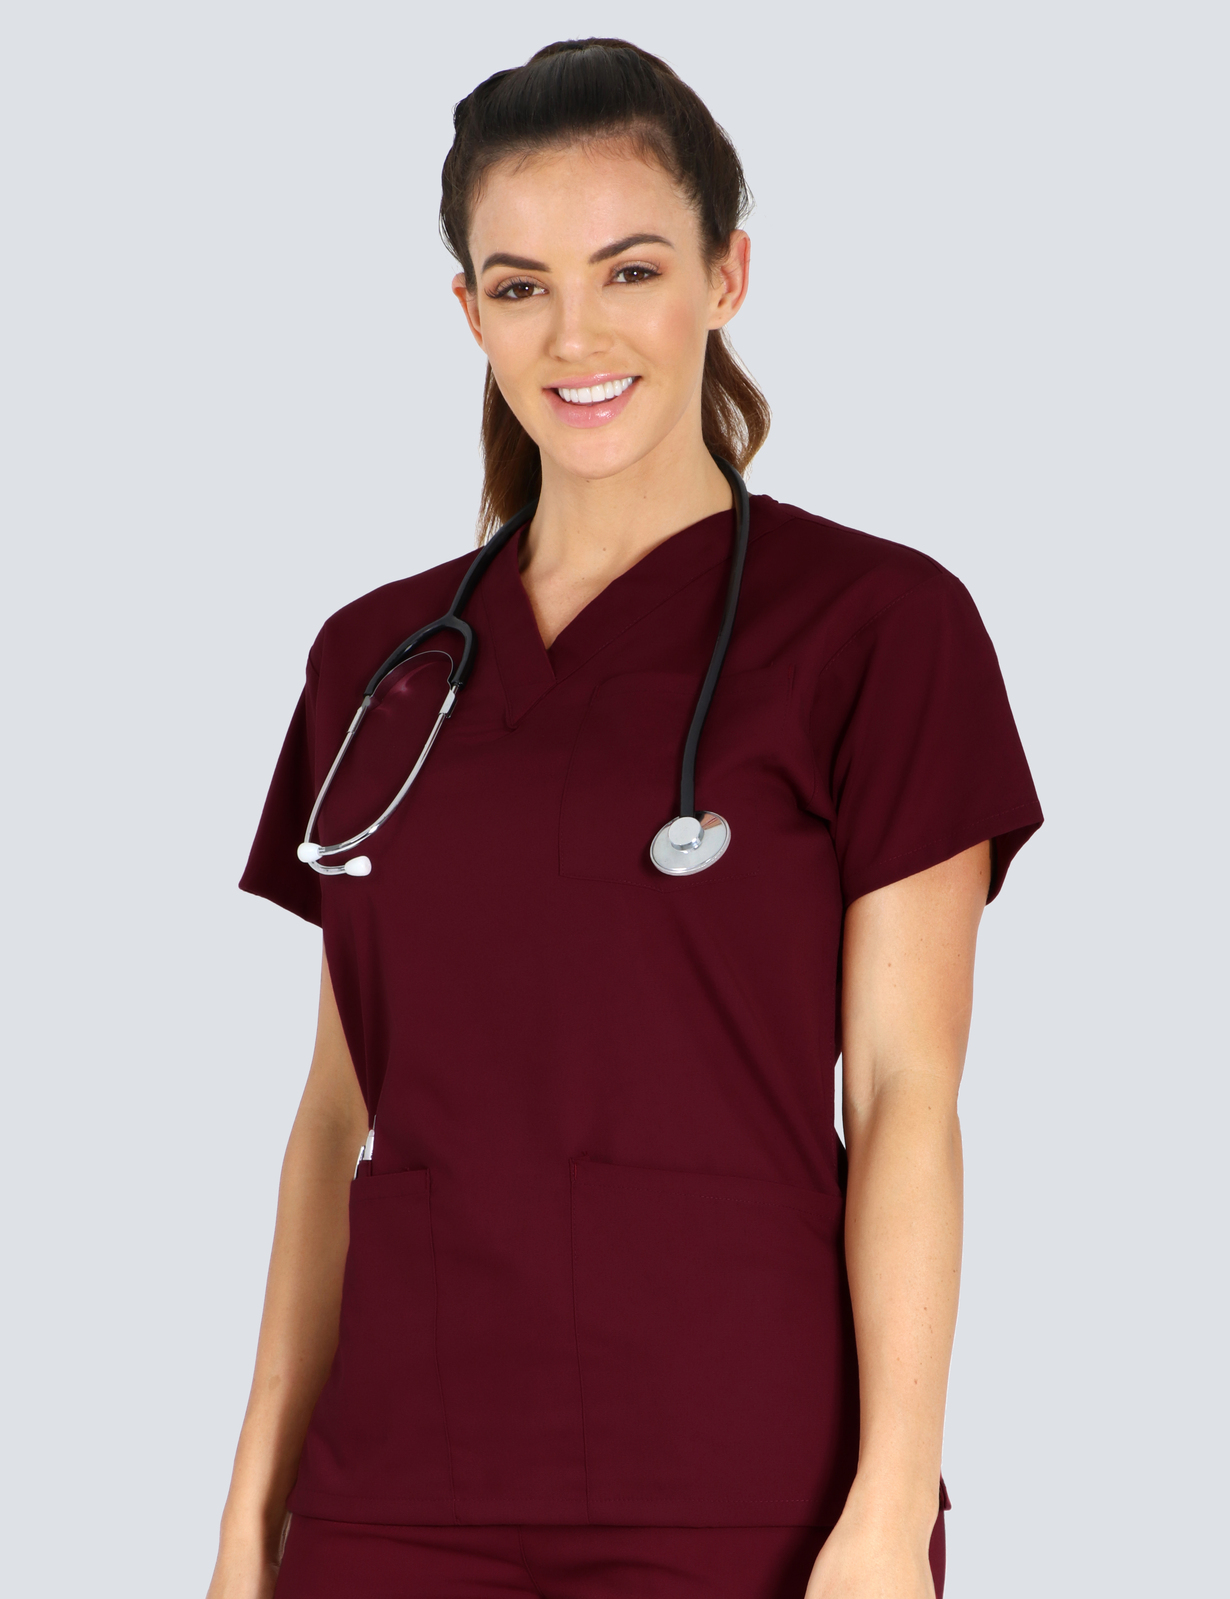 Queensland Children's Hospital Emergency Department Clinical Facilitator Uniform Top Bundle  (4 Pocket Top in Burgundy incl Logos)